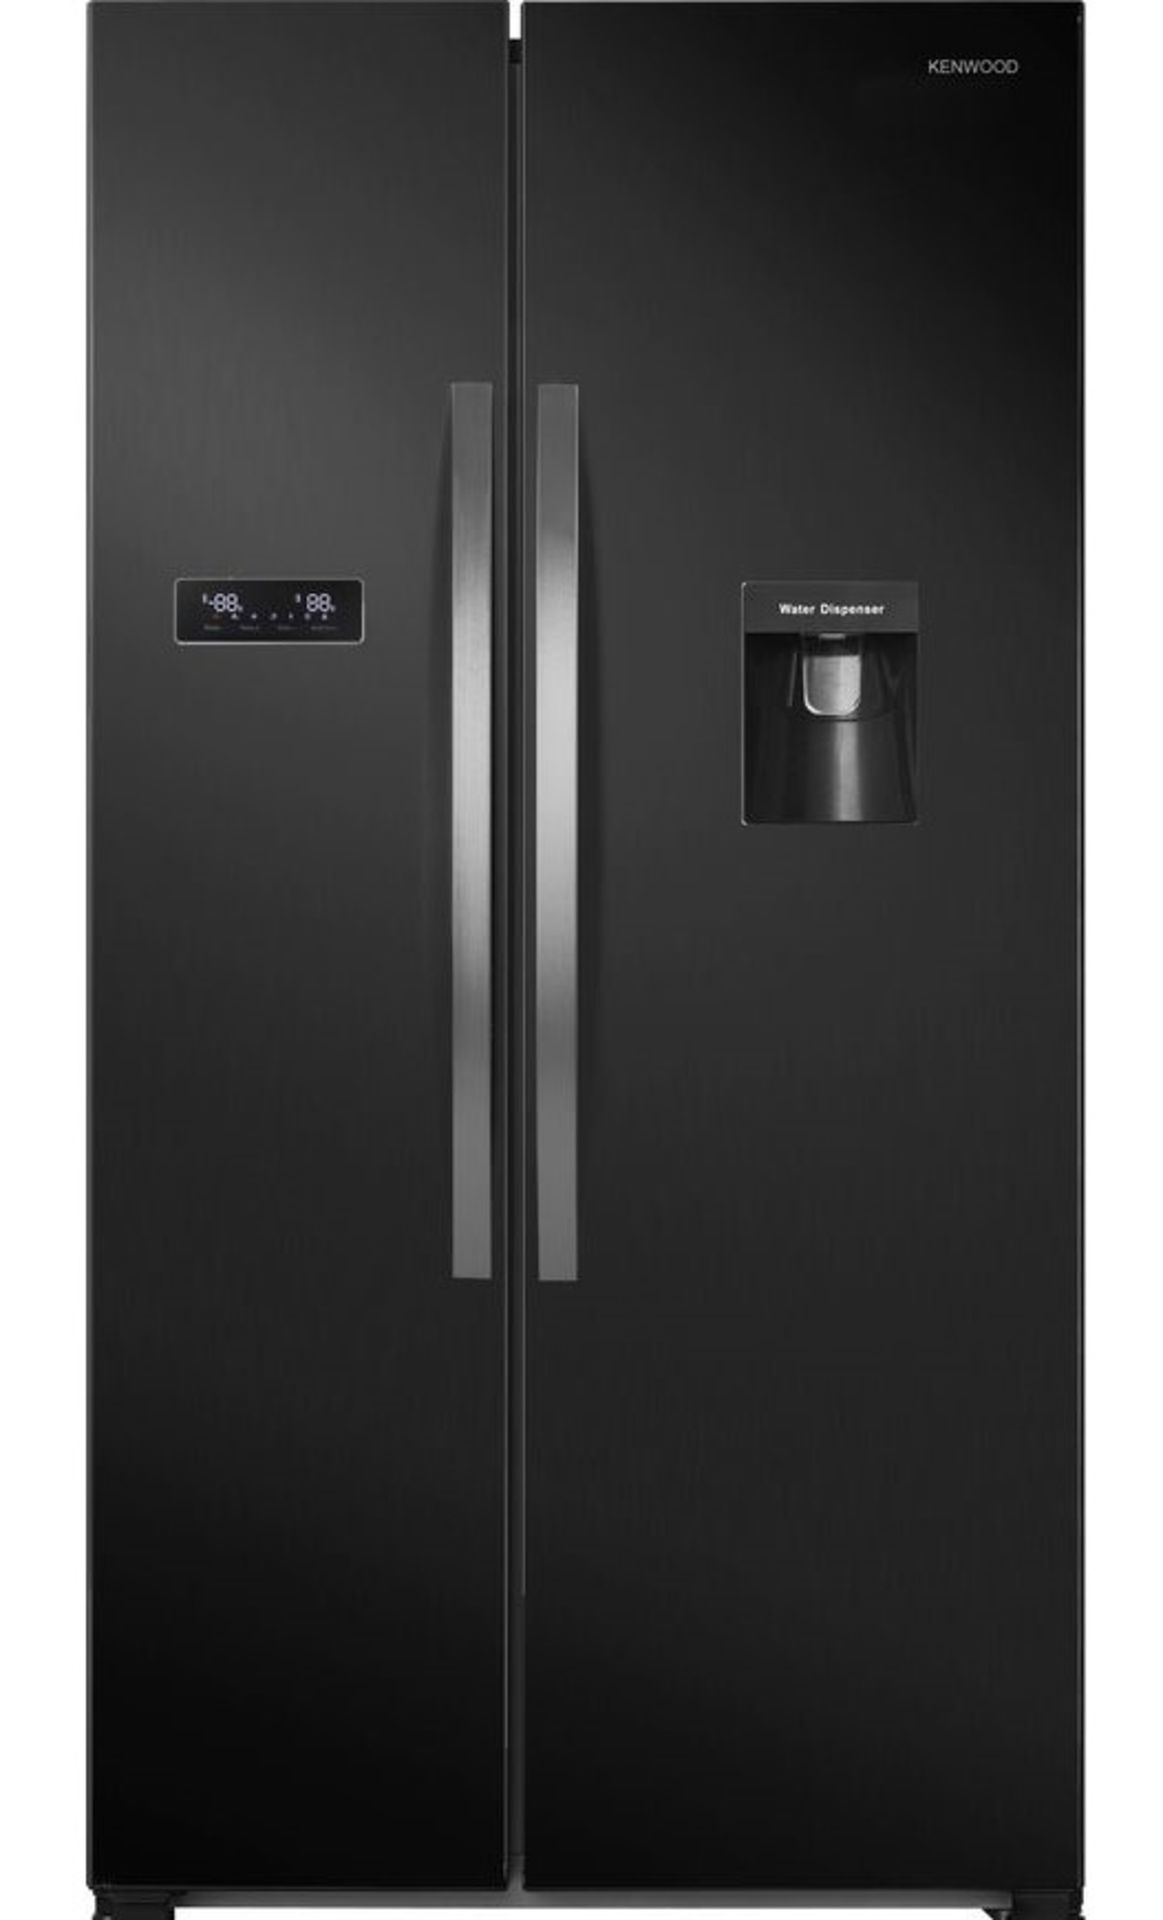 1 x Kenwood KSBSDB19 Gloss Black American Style Fridge Freezer With Water Dispenser - Image 4 of 6